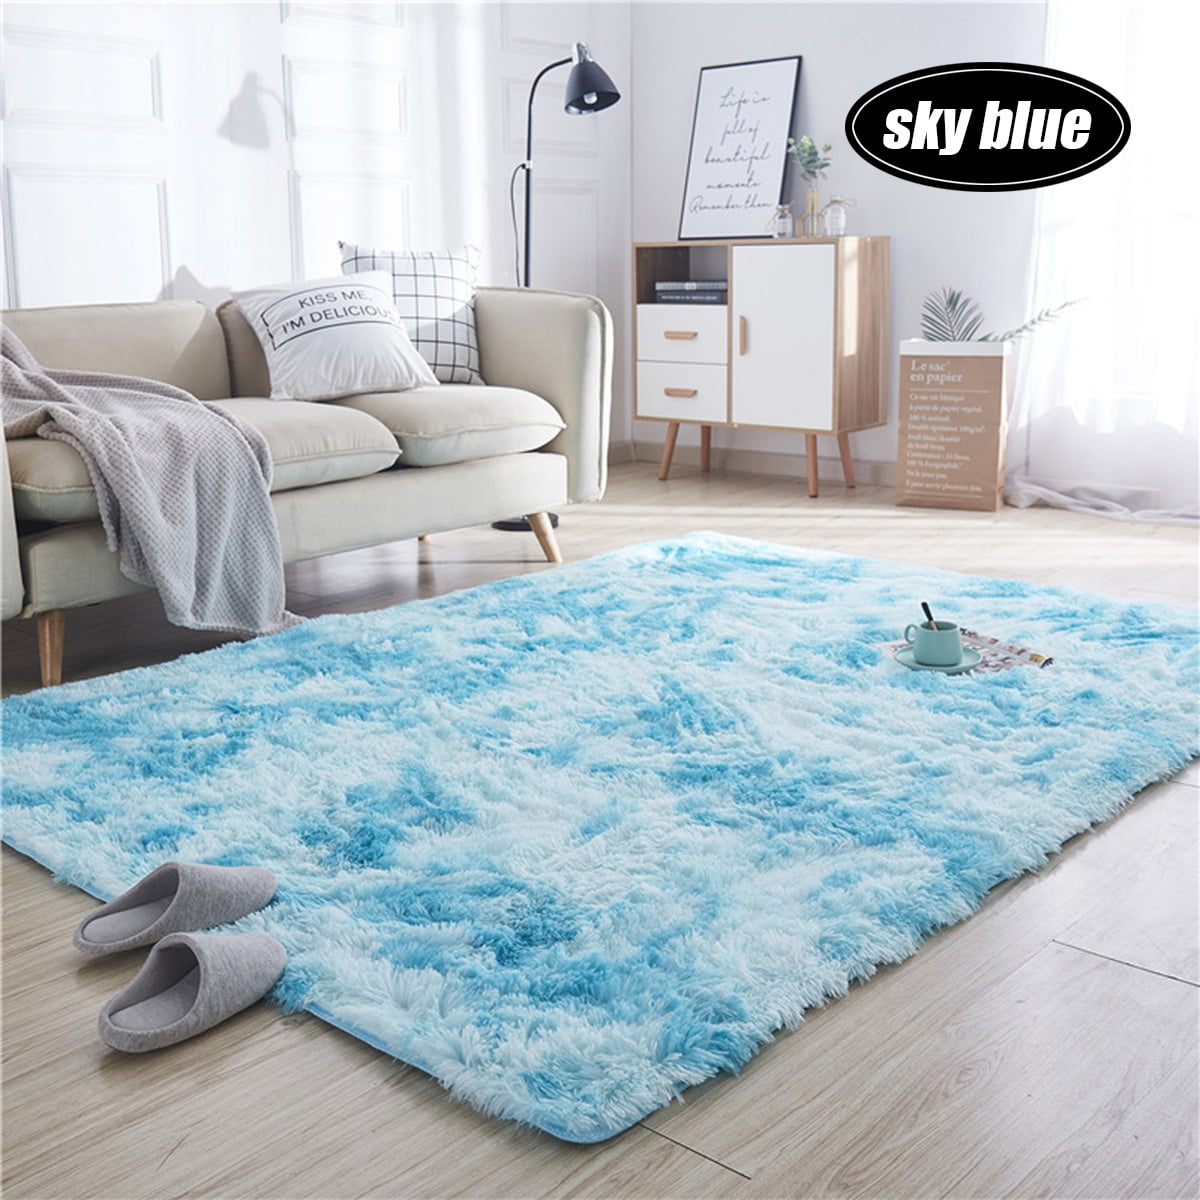 Rectangle Ultra Soft Area Rugs Fluffy Carpets For Bedroom Living Room Shaggy Floor Rug Home Decor Mats 39 3 X62 9 39 3 X78 7 47 2 78 7 7 Colors Walmart Canada